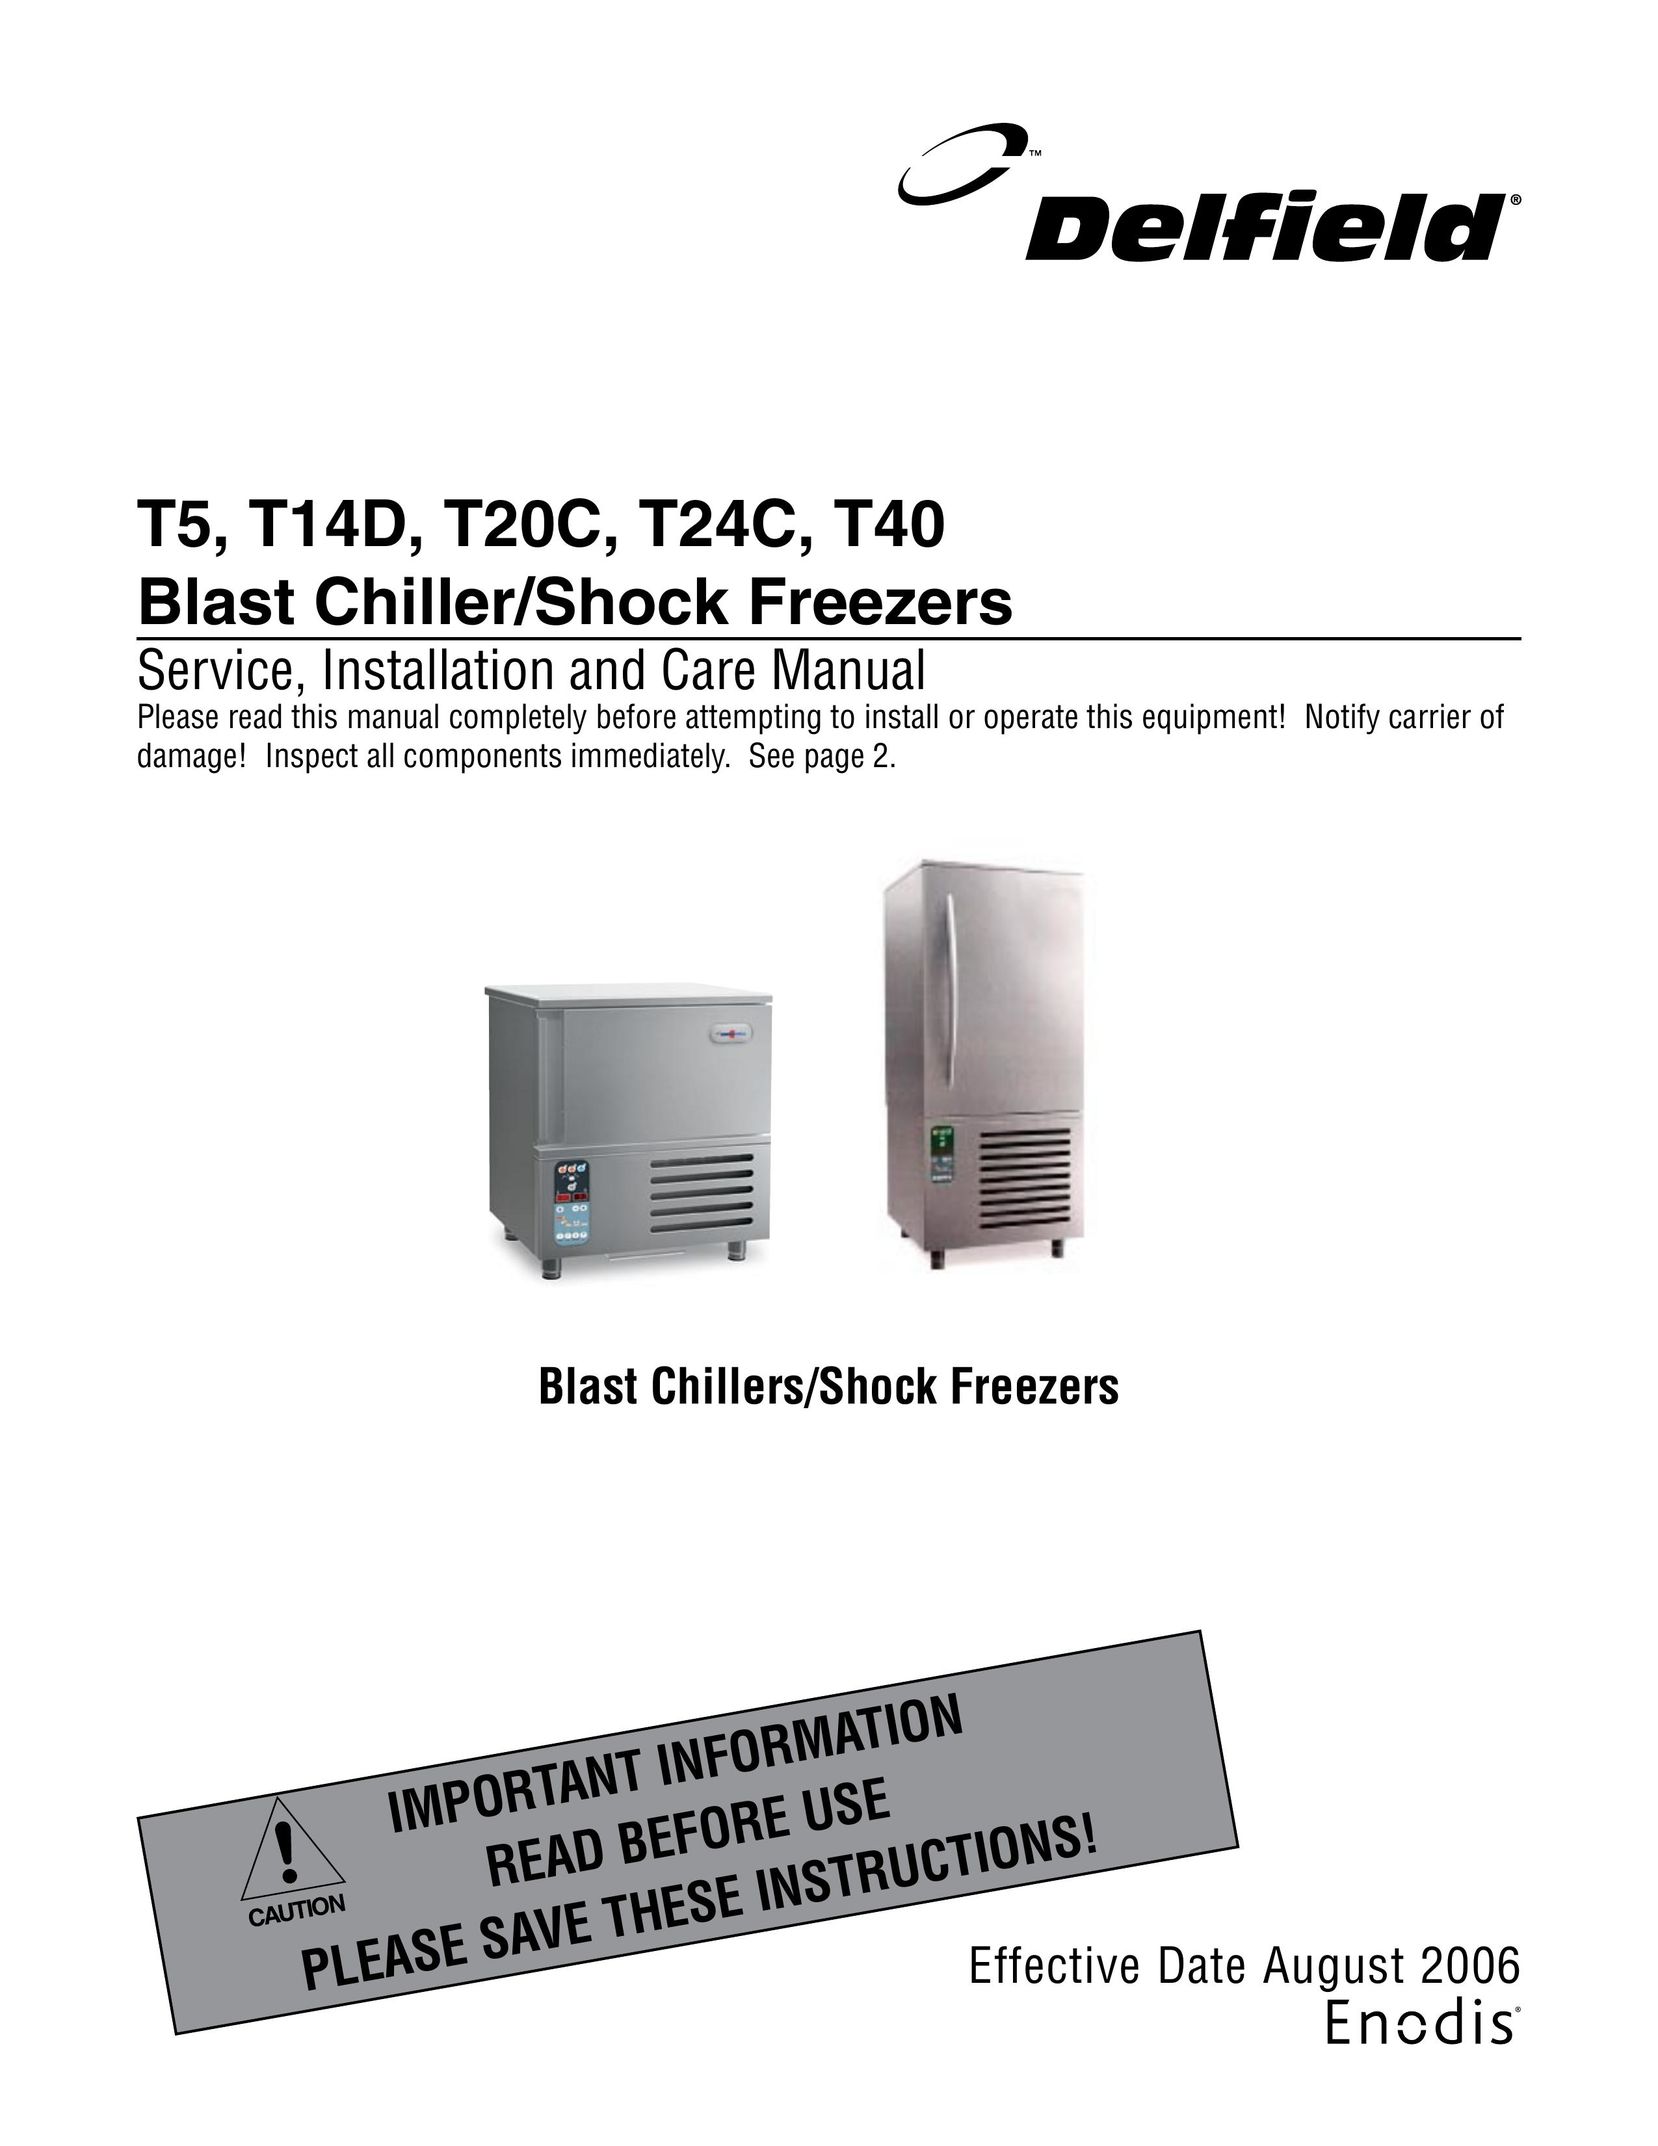 Delfield T20C Freezer User Manual